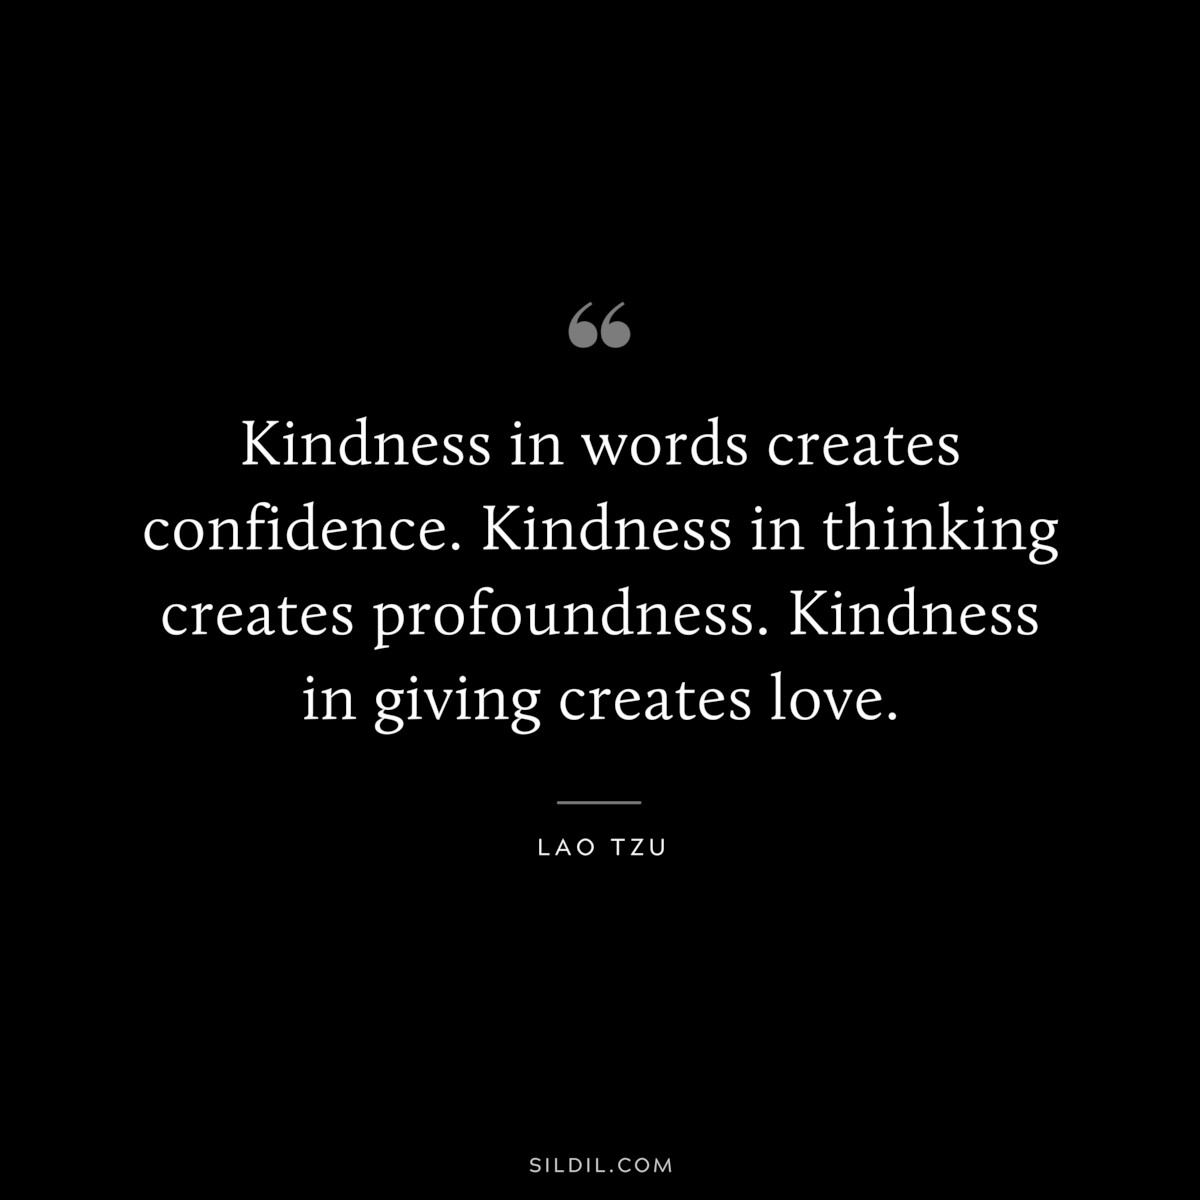 Kindness in words creates confidence. Kindness in thinking creates profoundness. Kindness in giving creates love. ― Lao Tzu